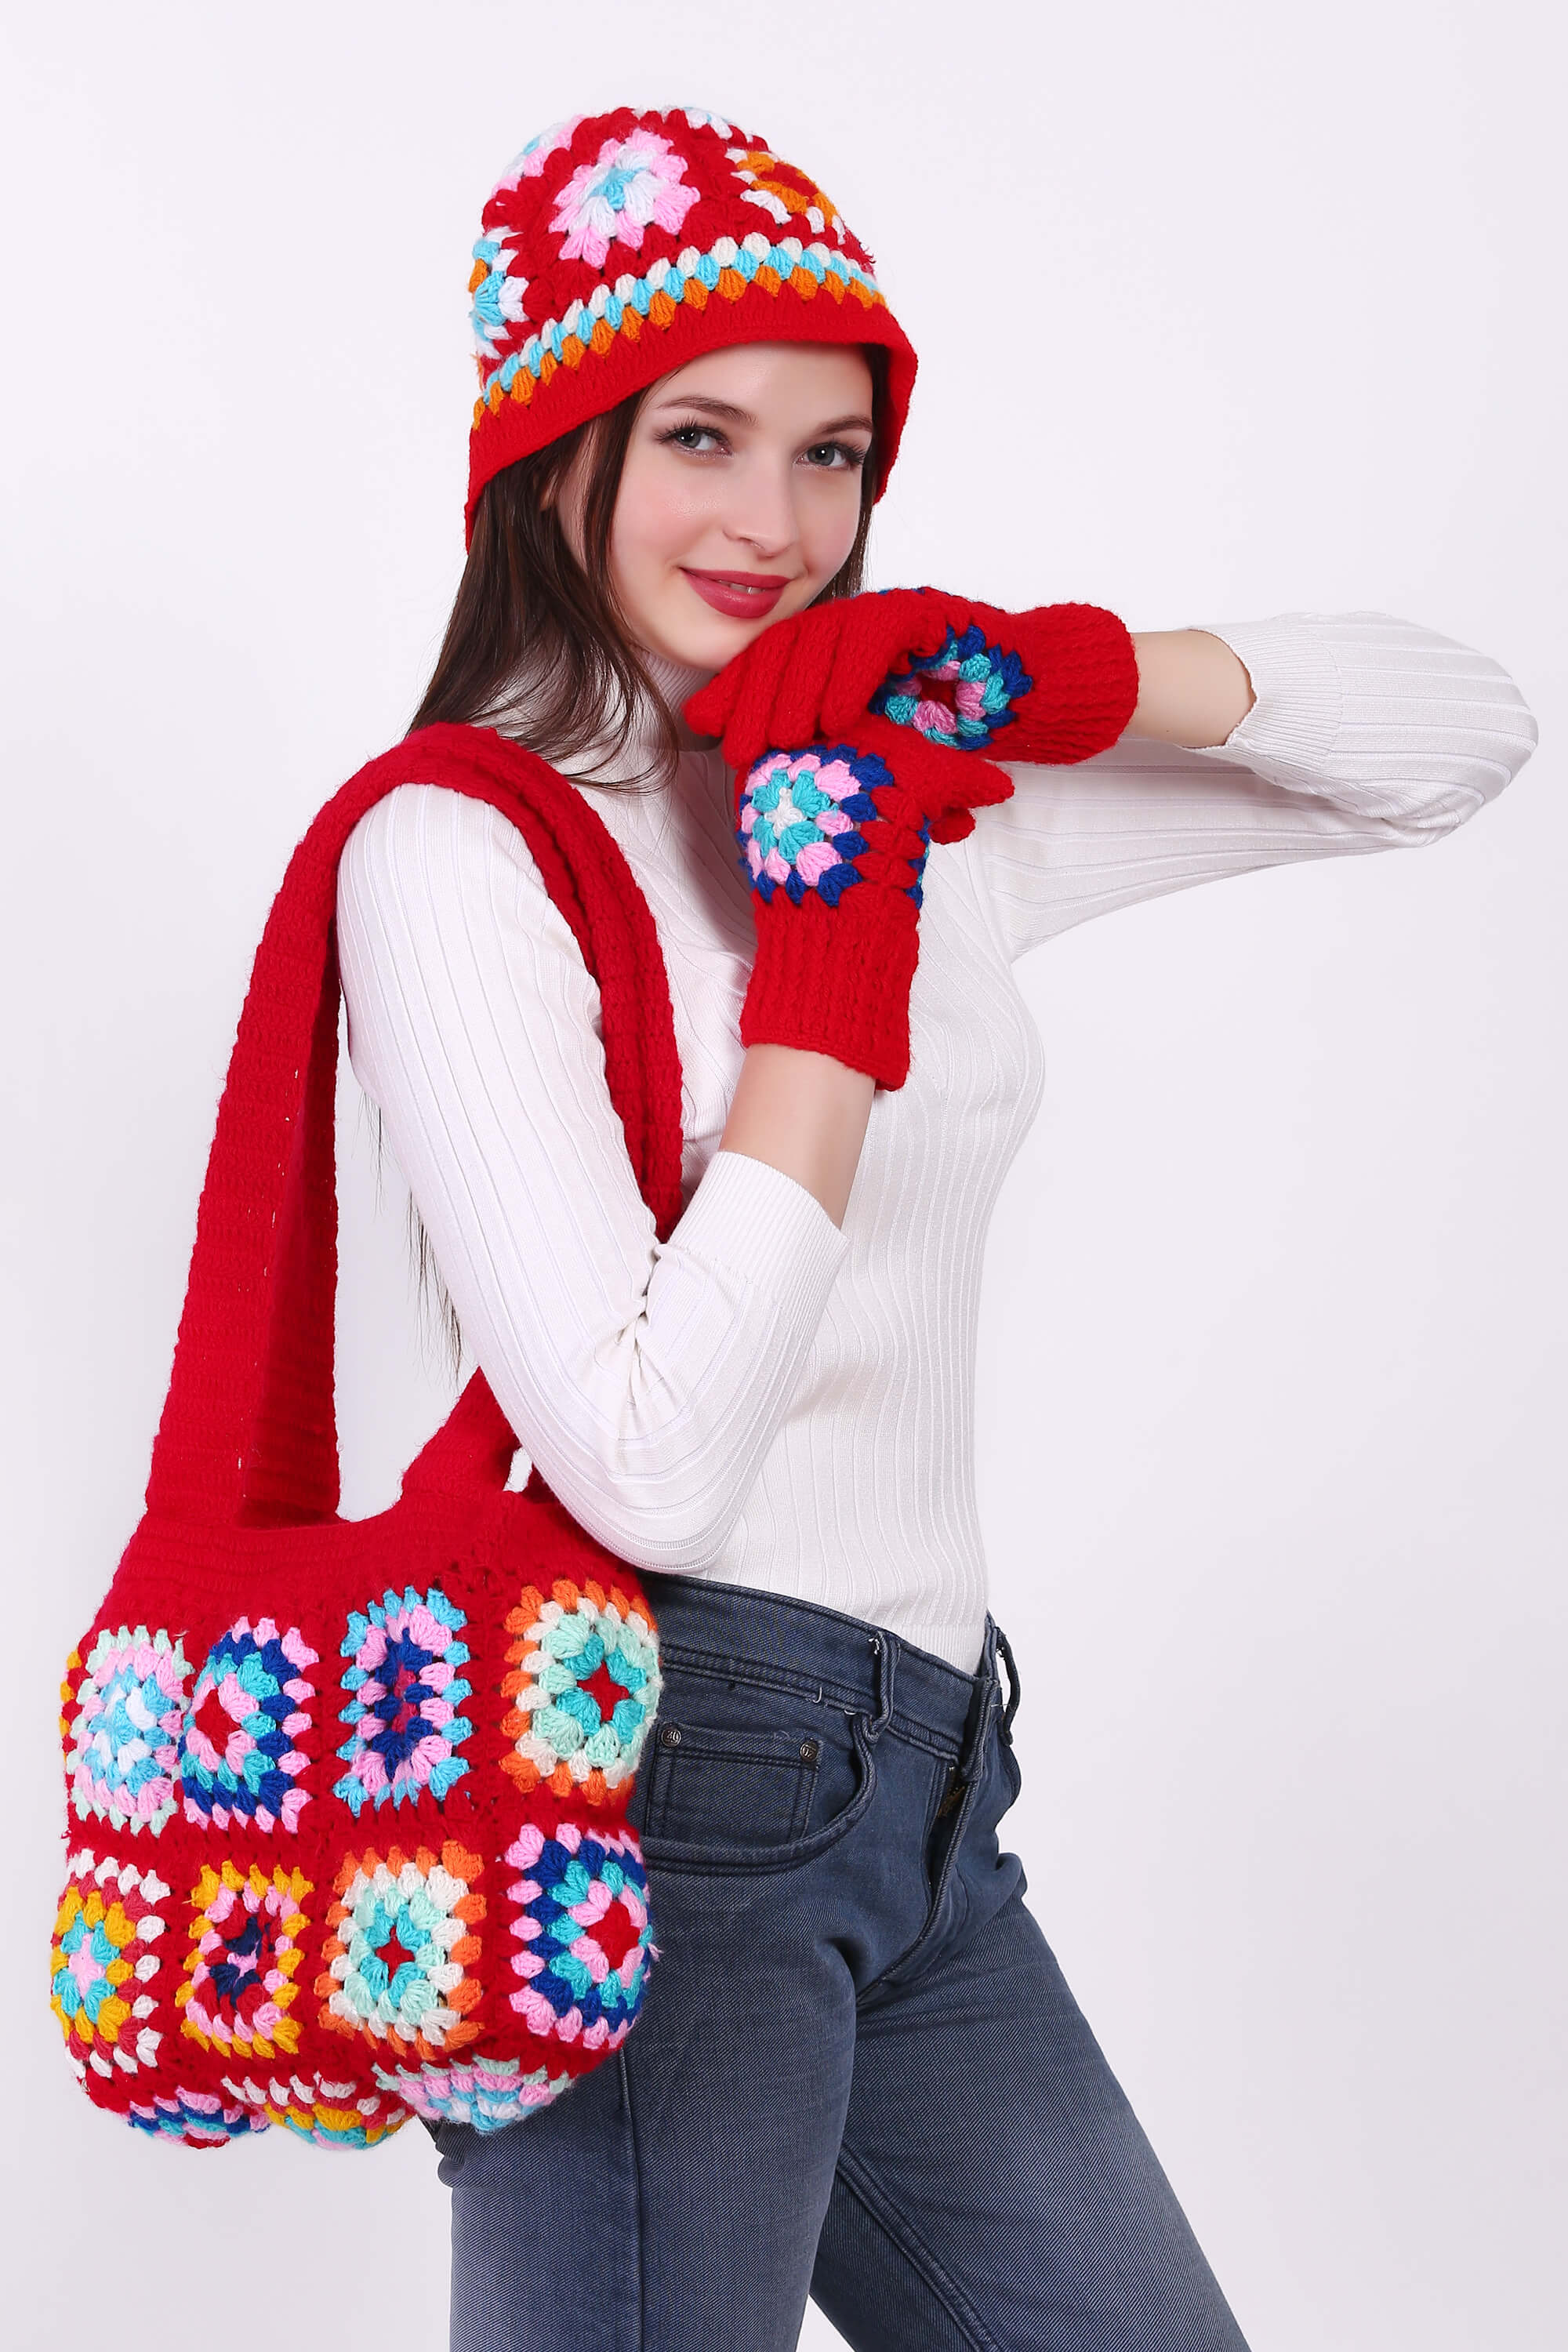 Crochet Granny Bag with Cap & Gloves